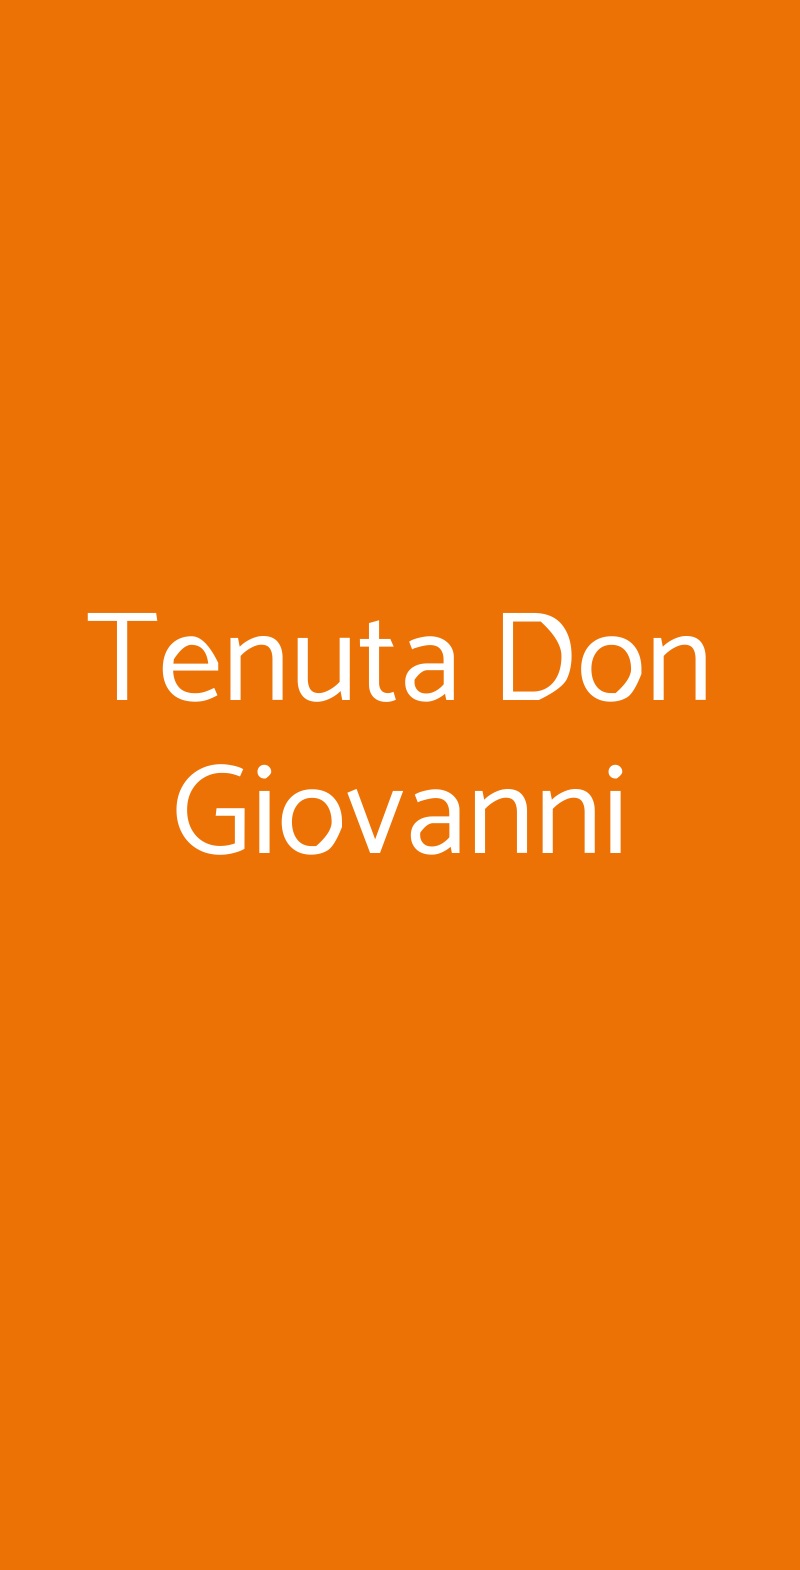 Tenuta Don Giovanni Melendugno menù 1 pagina